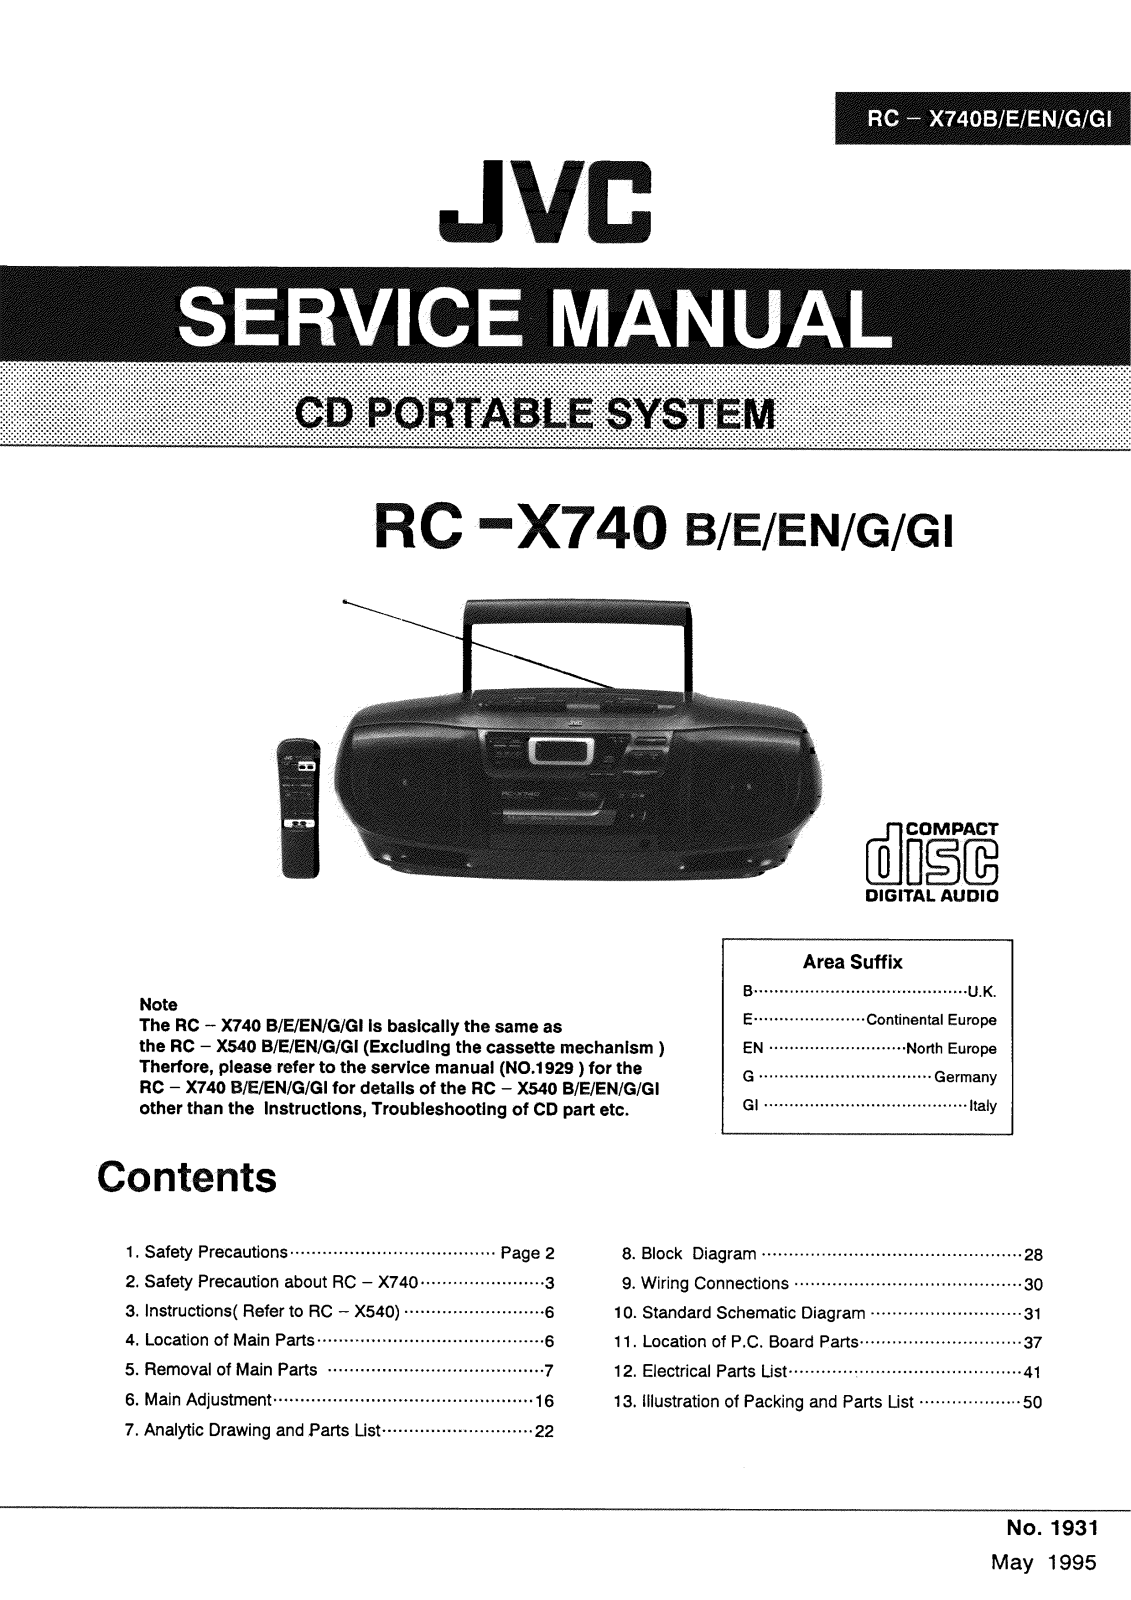 JVC RC-X740B, RC-X740E, RC-X740EN, RC-X740G, RC-X740GI Service Manual